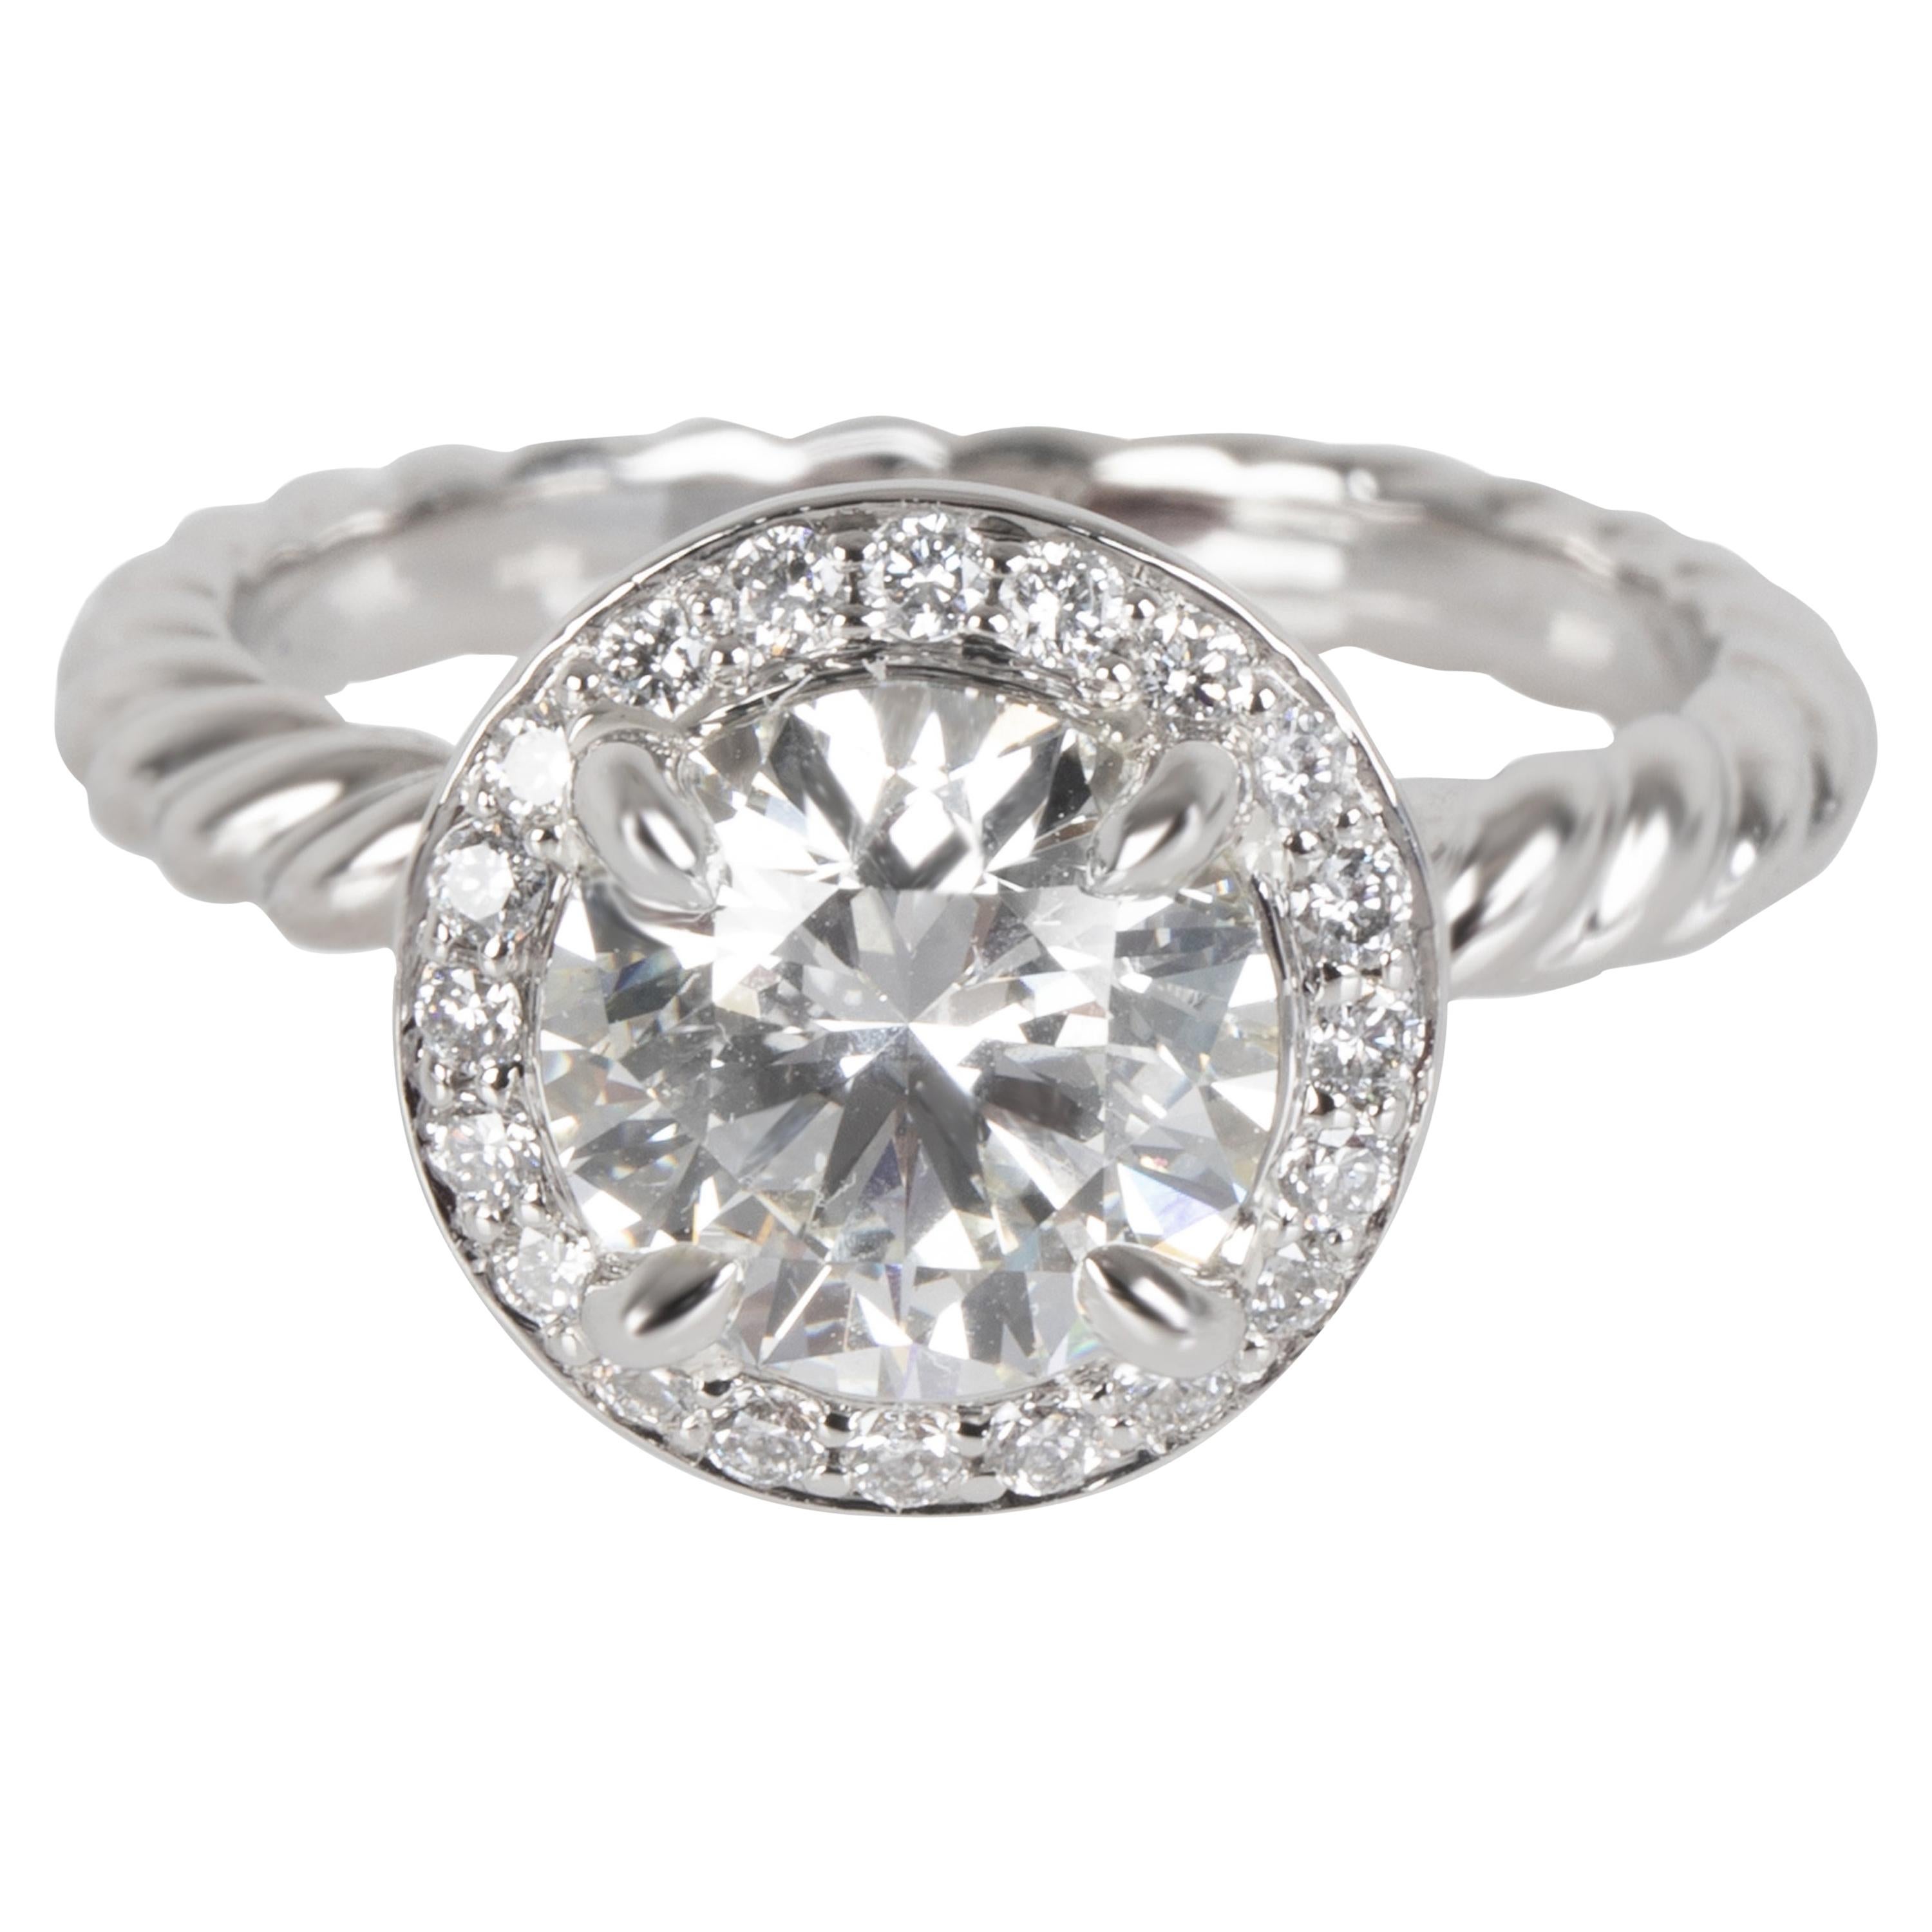 David Yurman Capri Halo Diamond Engagement Ring in Platinum GIA H VS1 1.30 Carat